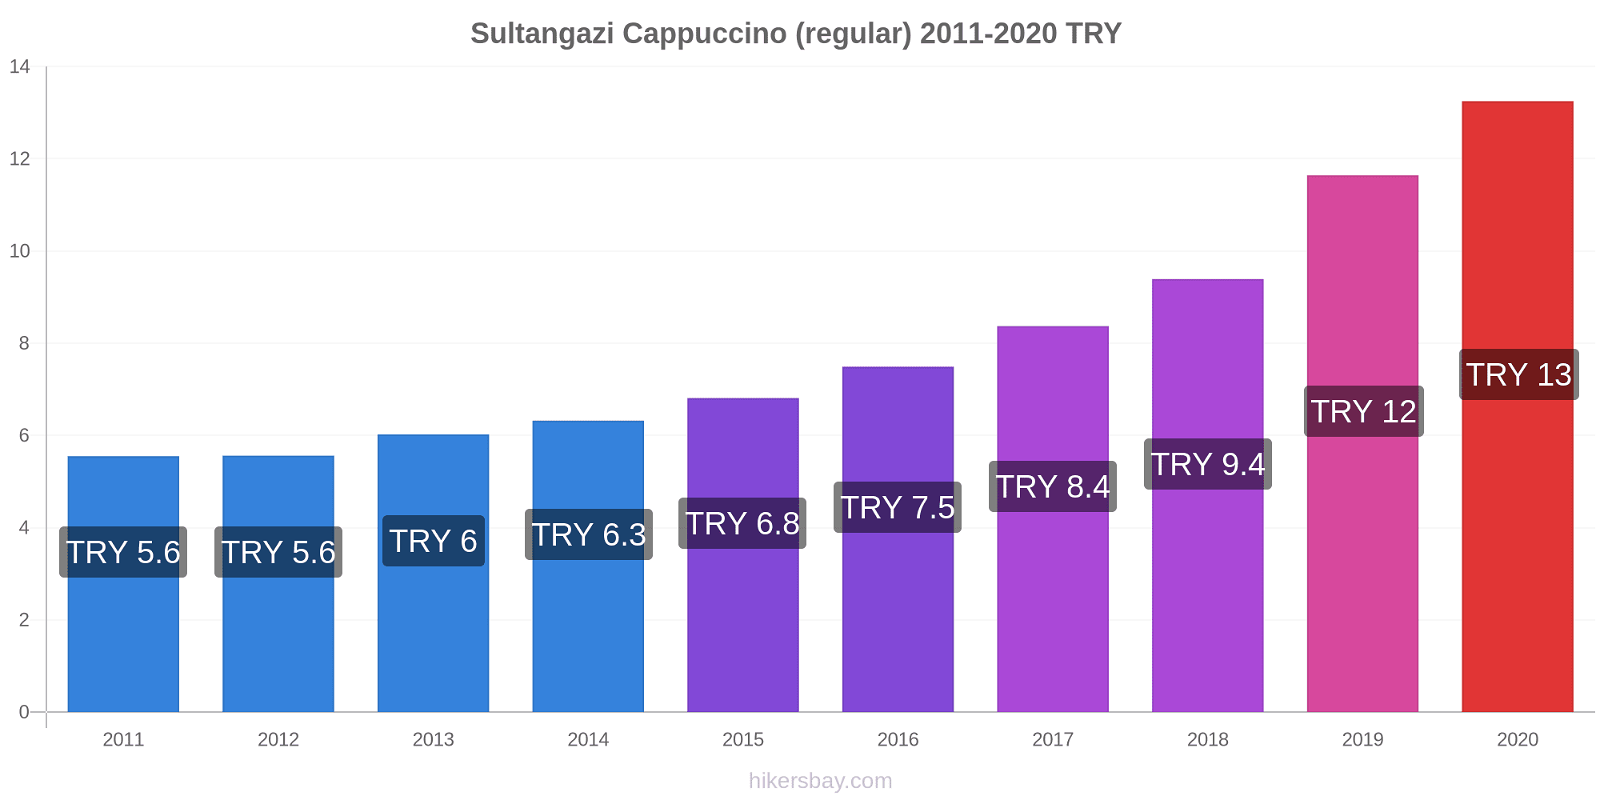 Sultangazi price changes Cappuccino (regular) hikersbay.com